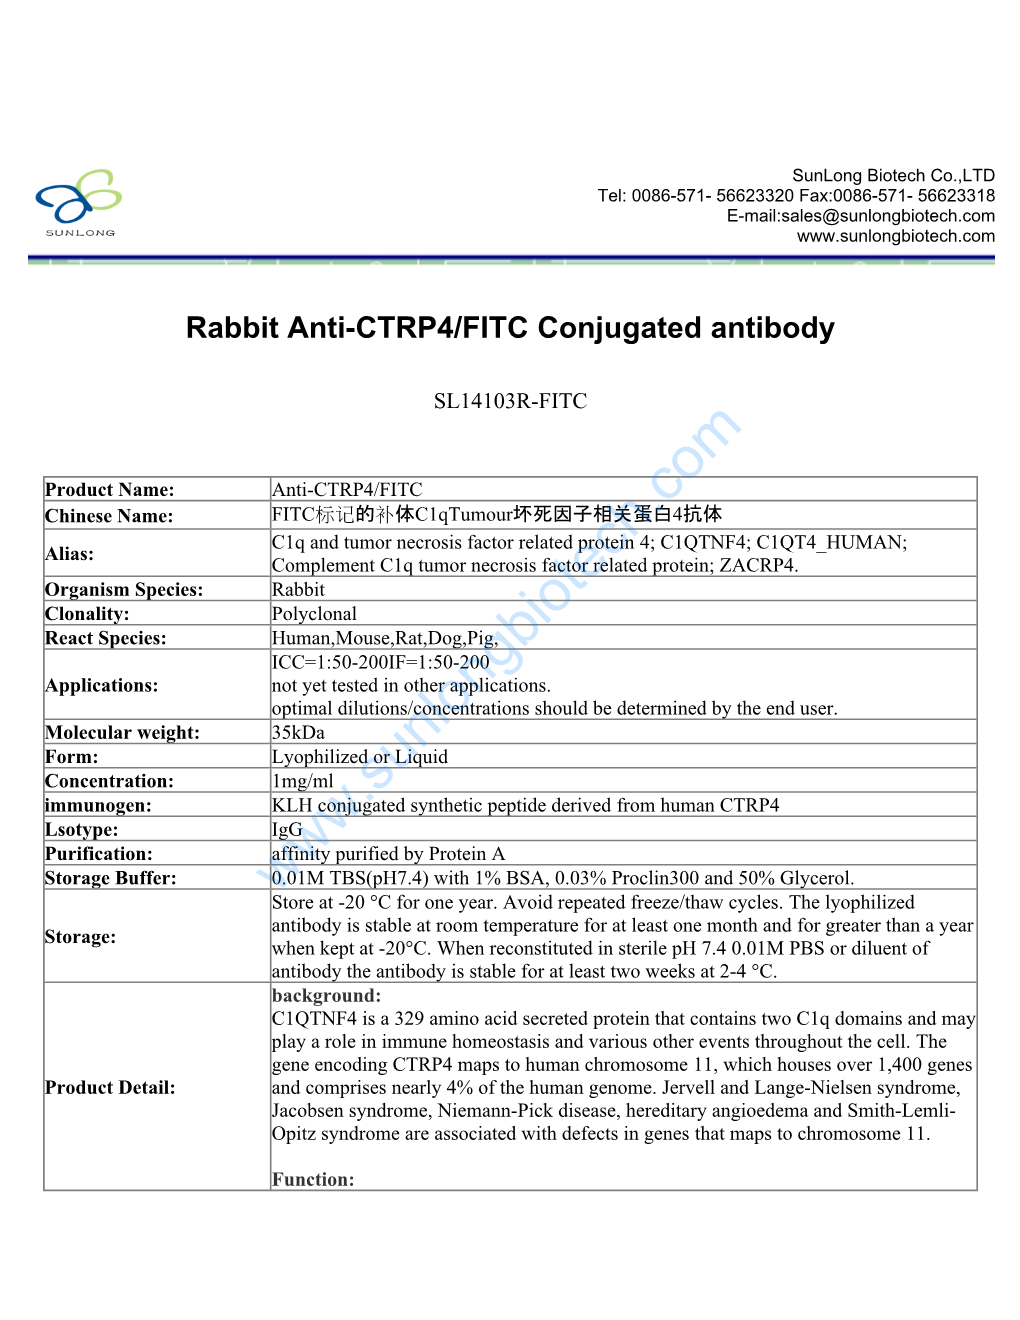 Rabbit Anti-CTRP4/FITC Conjugated Antibody-SL14103R-FITC